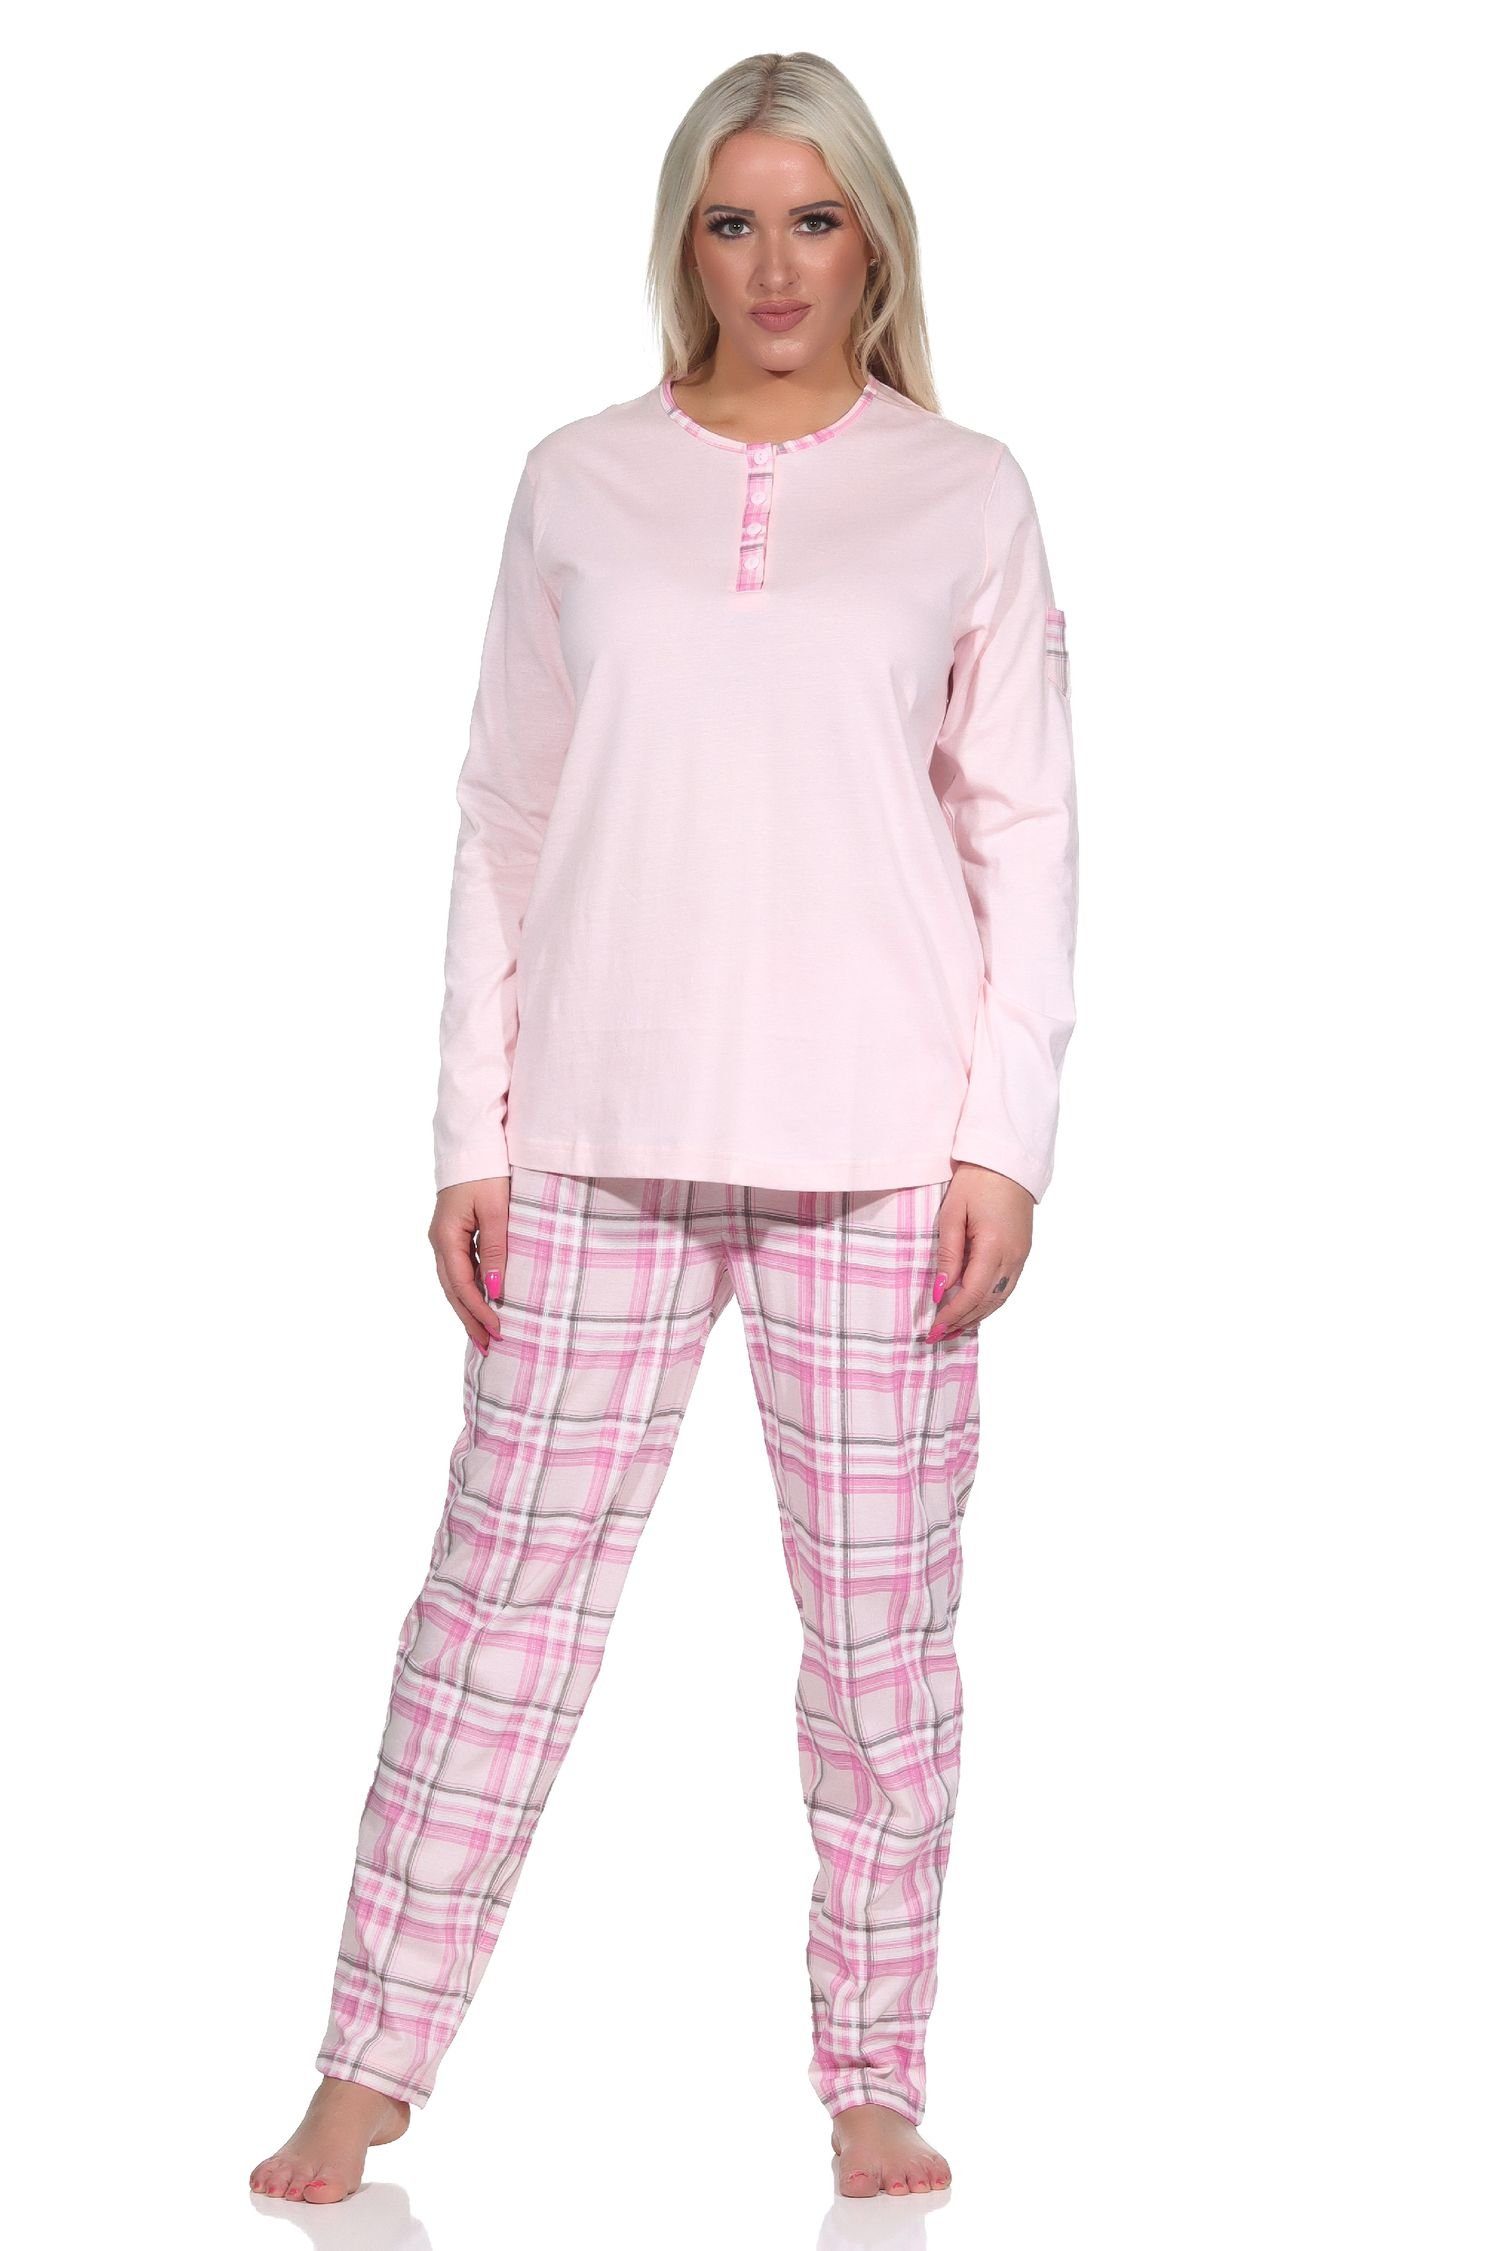 Normann langarm Pyjama Pyjama rosa mit Schlafanzug karierter Hose aus Damen Jersey